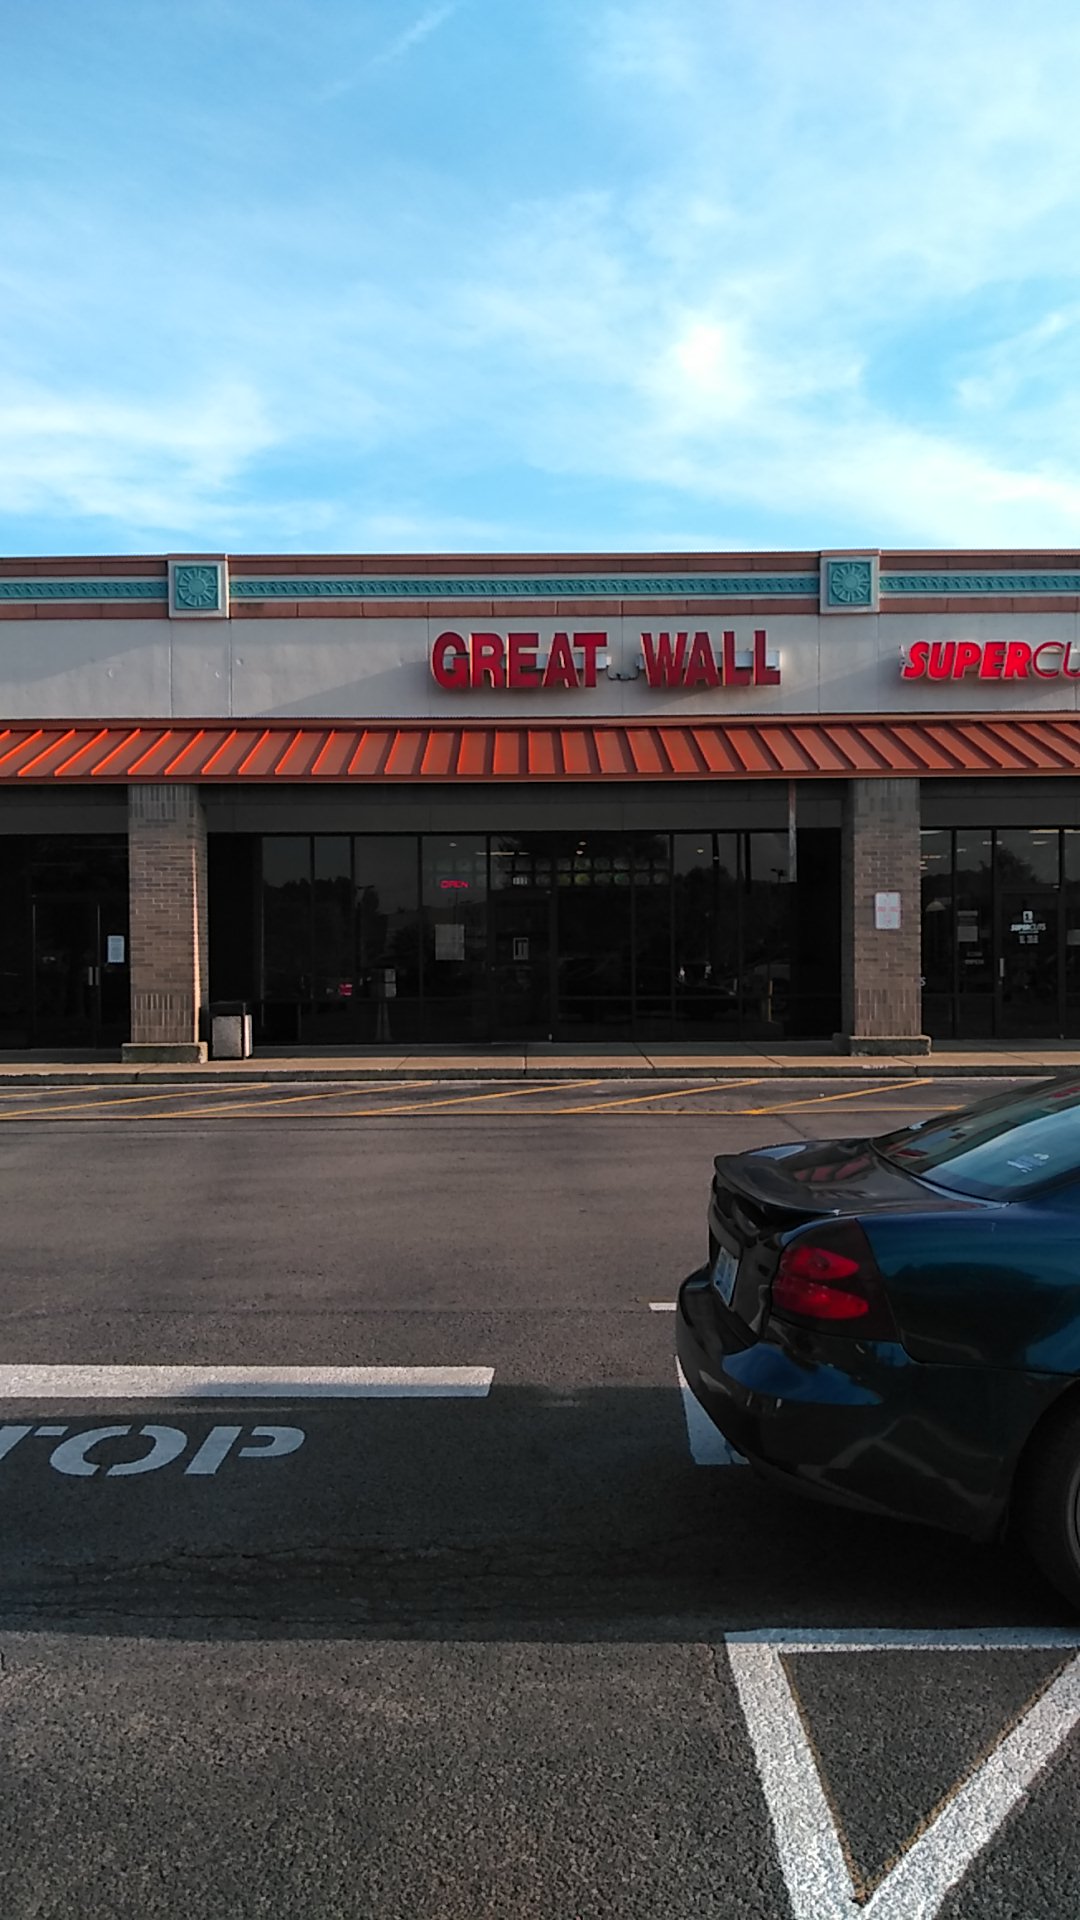 Great Wall restaurant